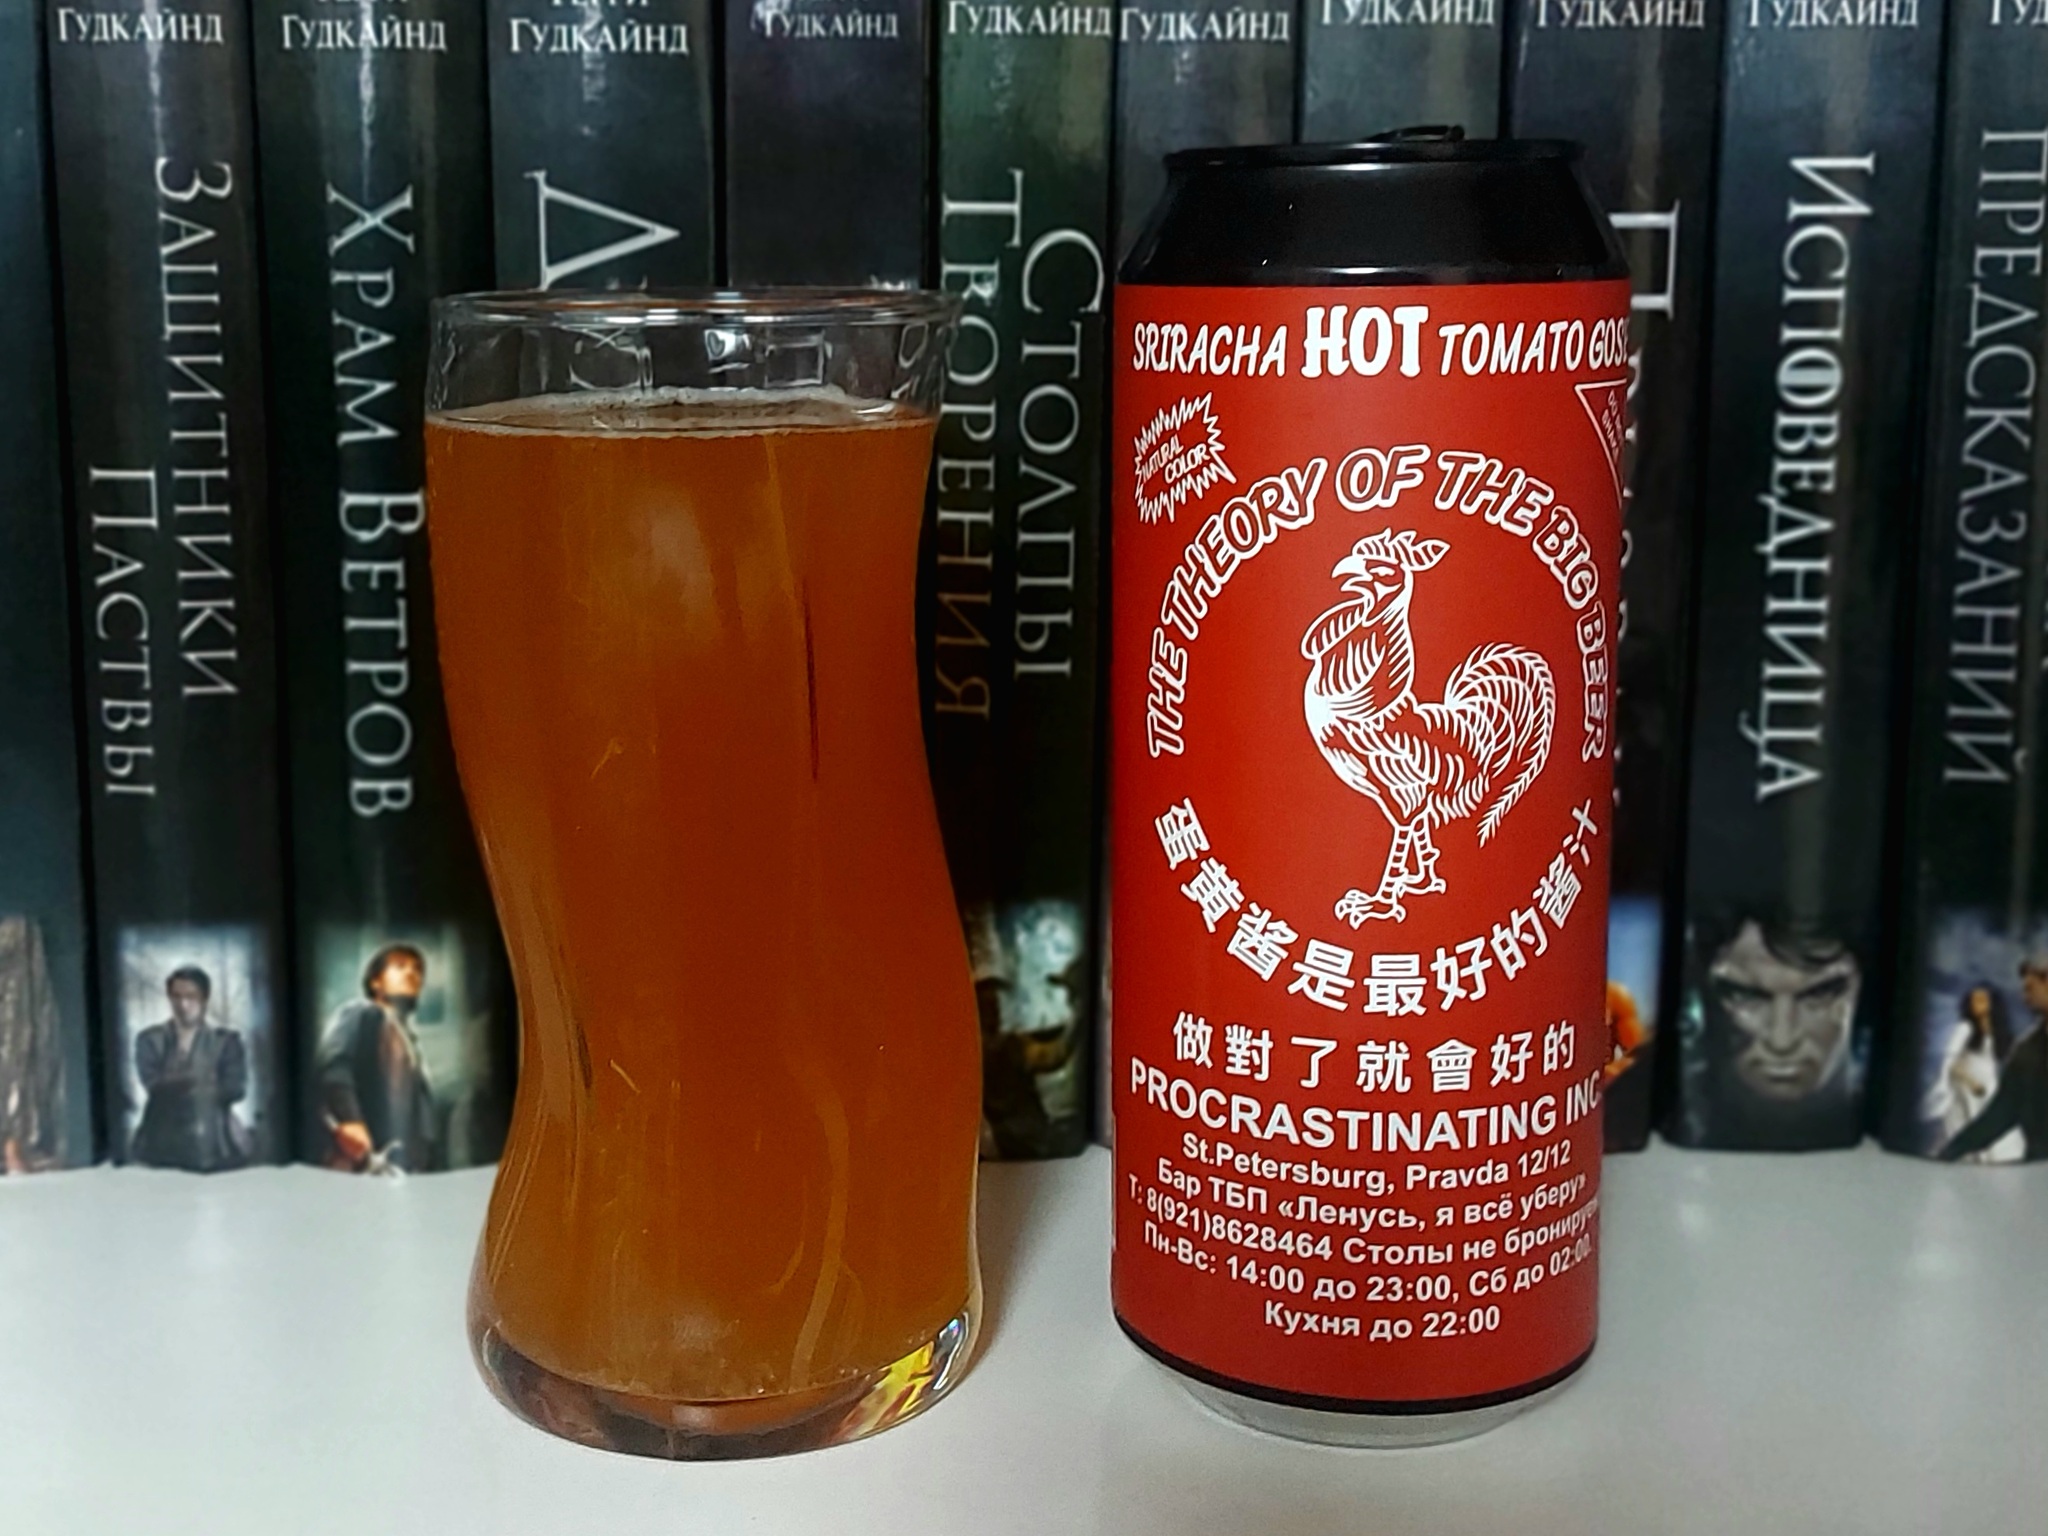 Tomato Repulsion. - My, Craft, Craft beer, Beer, Overview, Opinion, Scorpion Trinidad, Spicy, Very sharp, Pungency, Tabasco, Longpost, Sriracha sauce, Gose